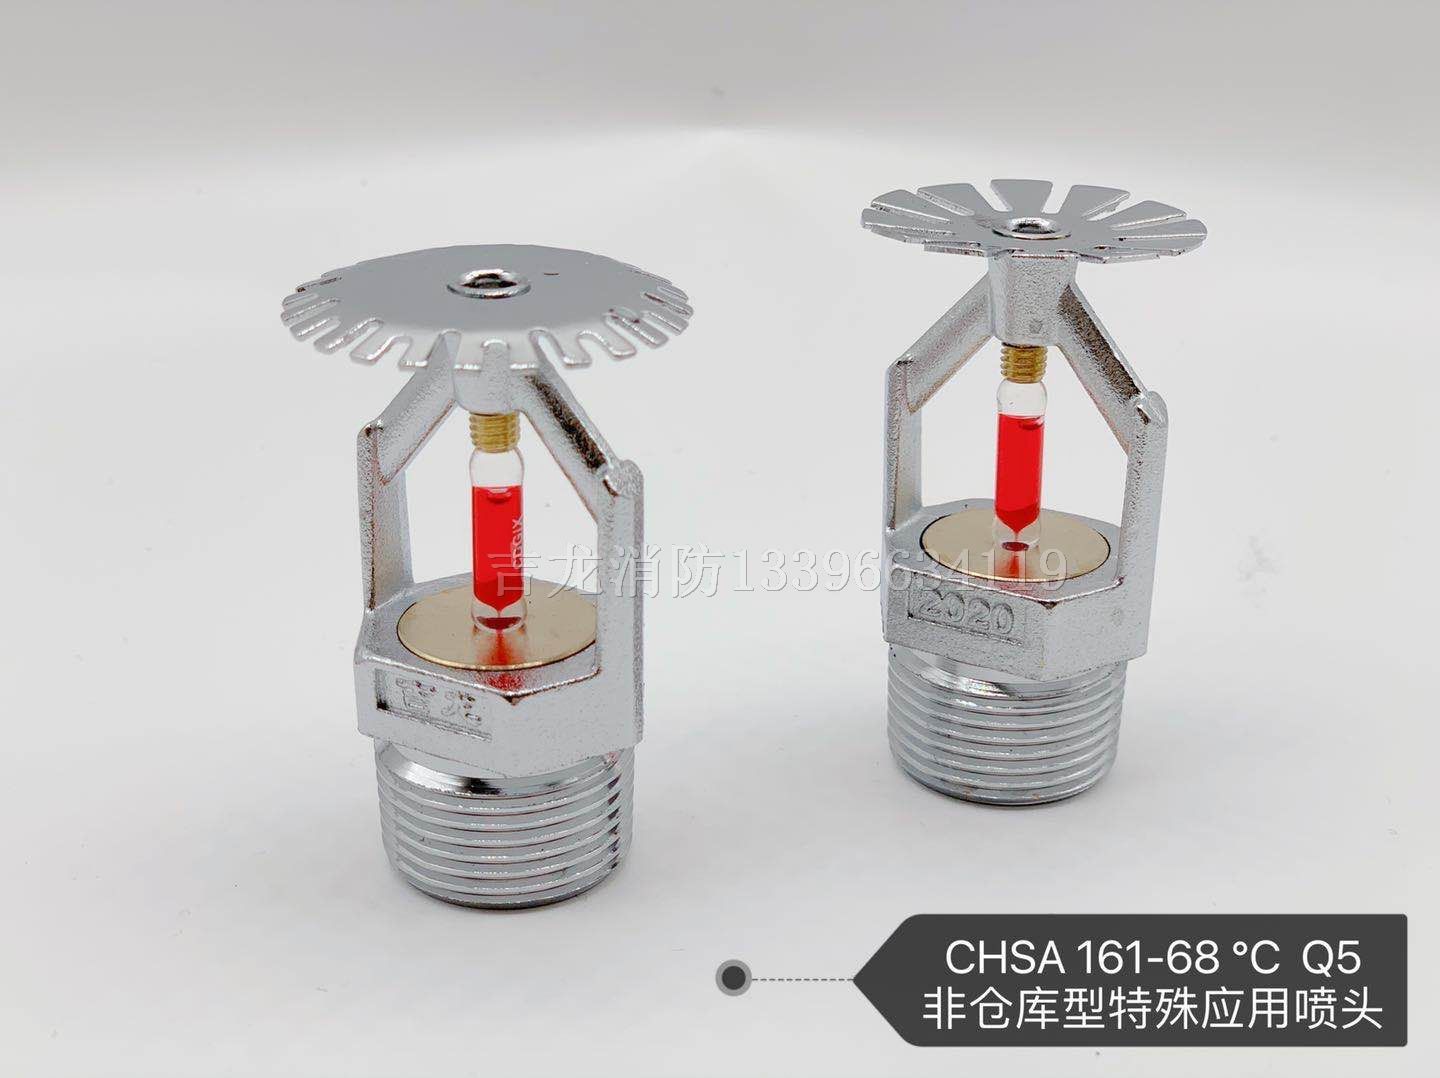 CHSA 161-68°C Q5非仓库型应用喷头